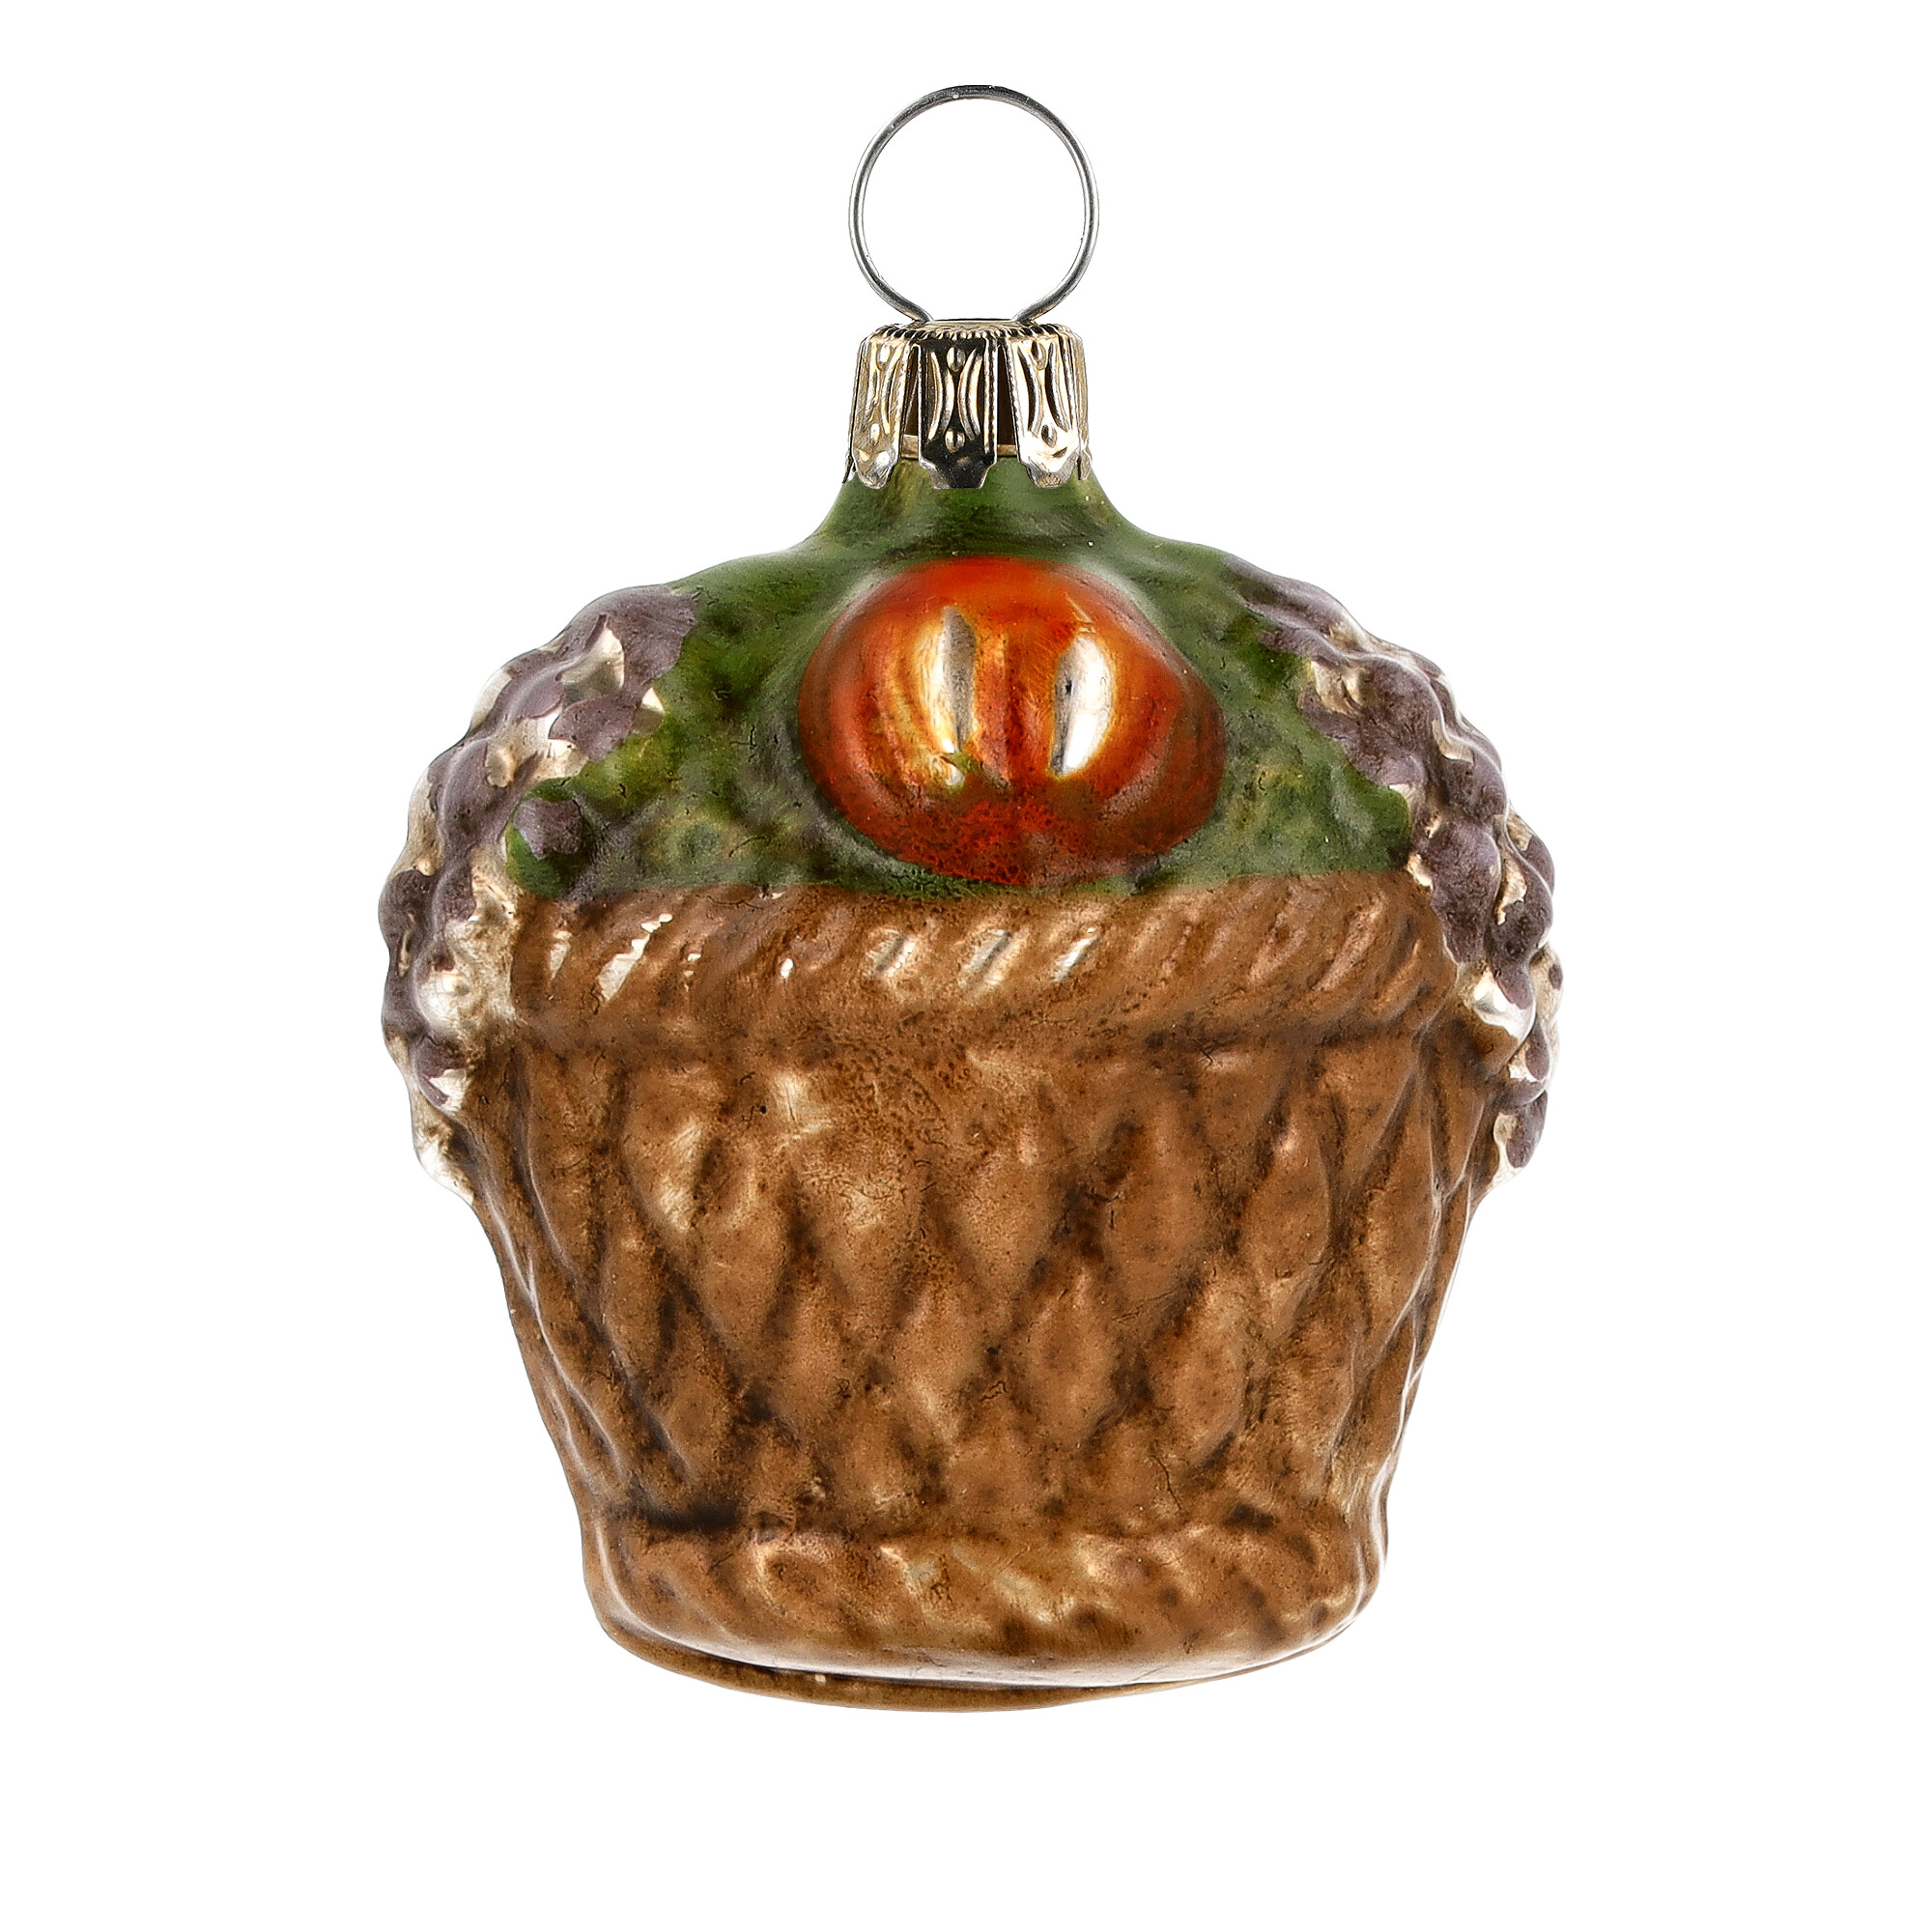 Retro Vintage style Christmas Glass Ornament - Little fruit basket